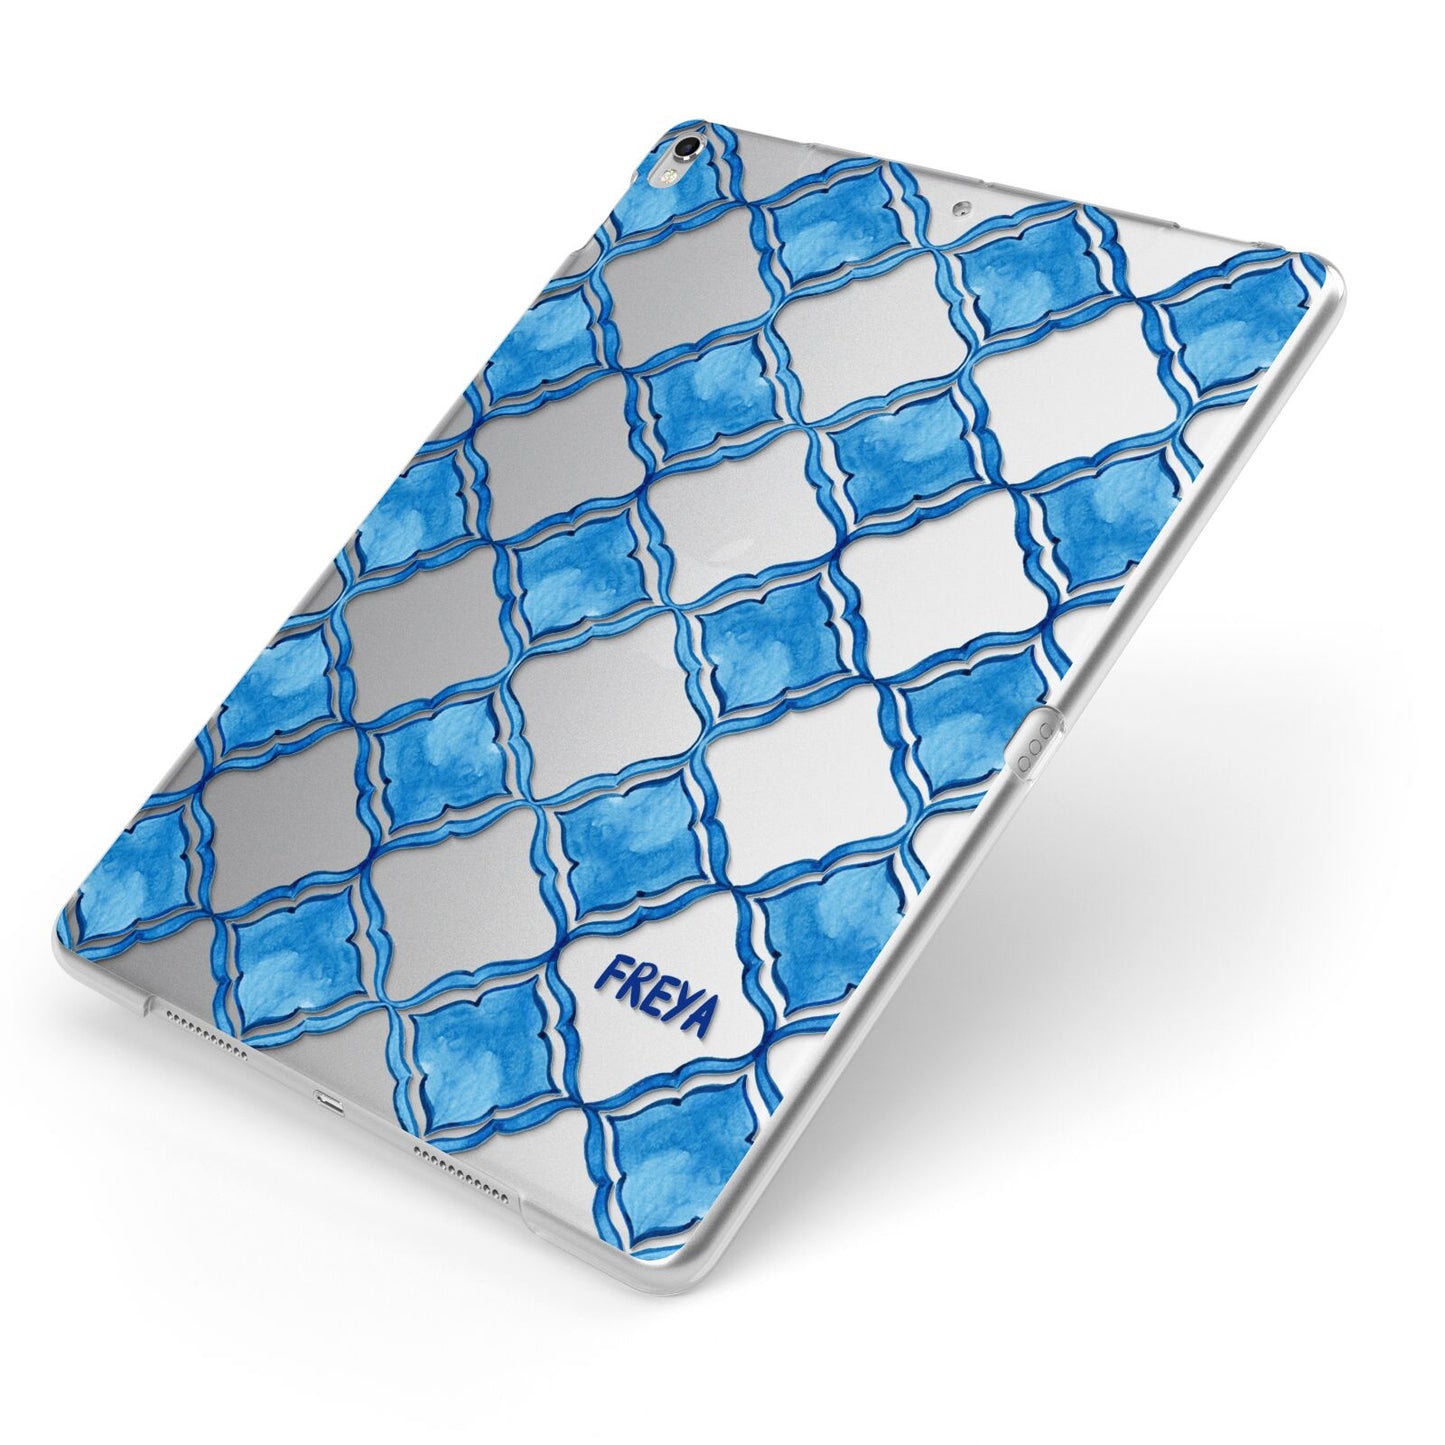 Personalised Mediterranean Tiles Apple iPad Case on Silver iPad Side View